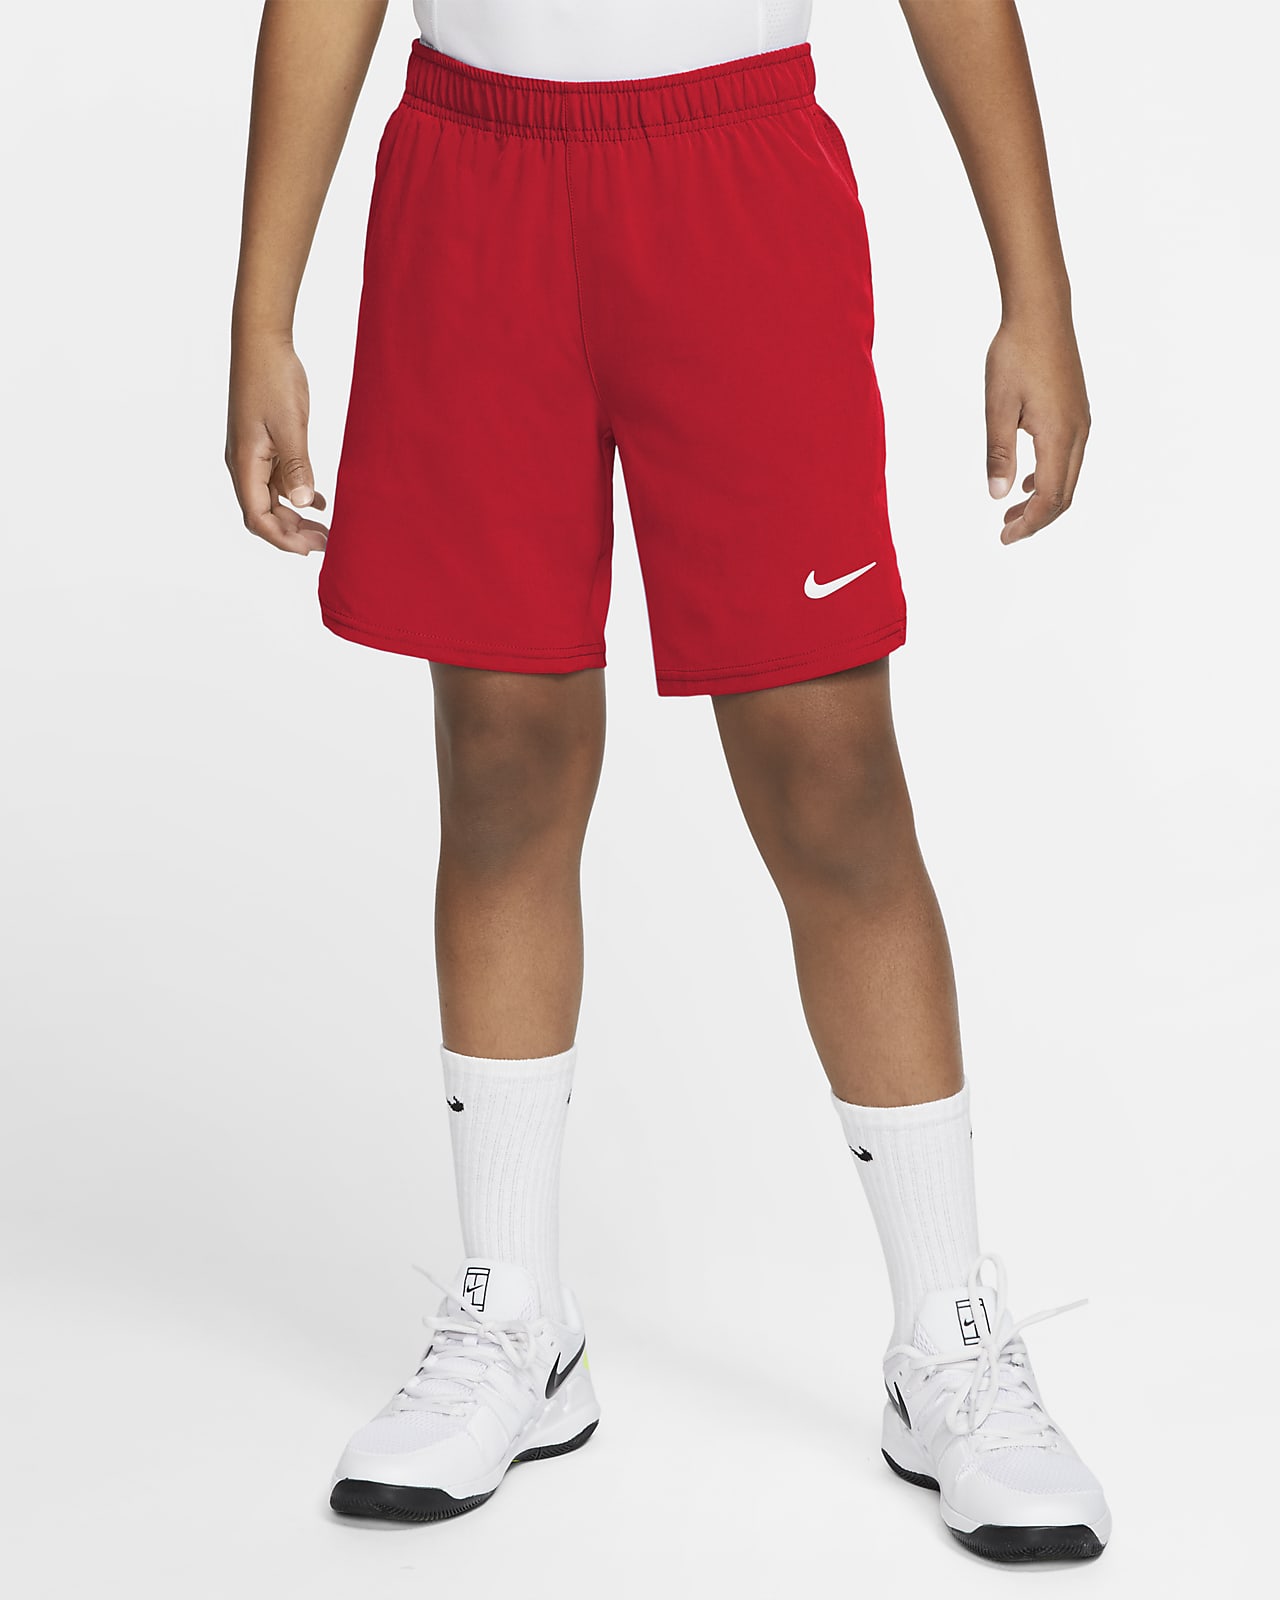 NikeCourt Flex Ace Pantalons curts de tennis - Nen